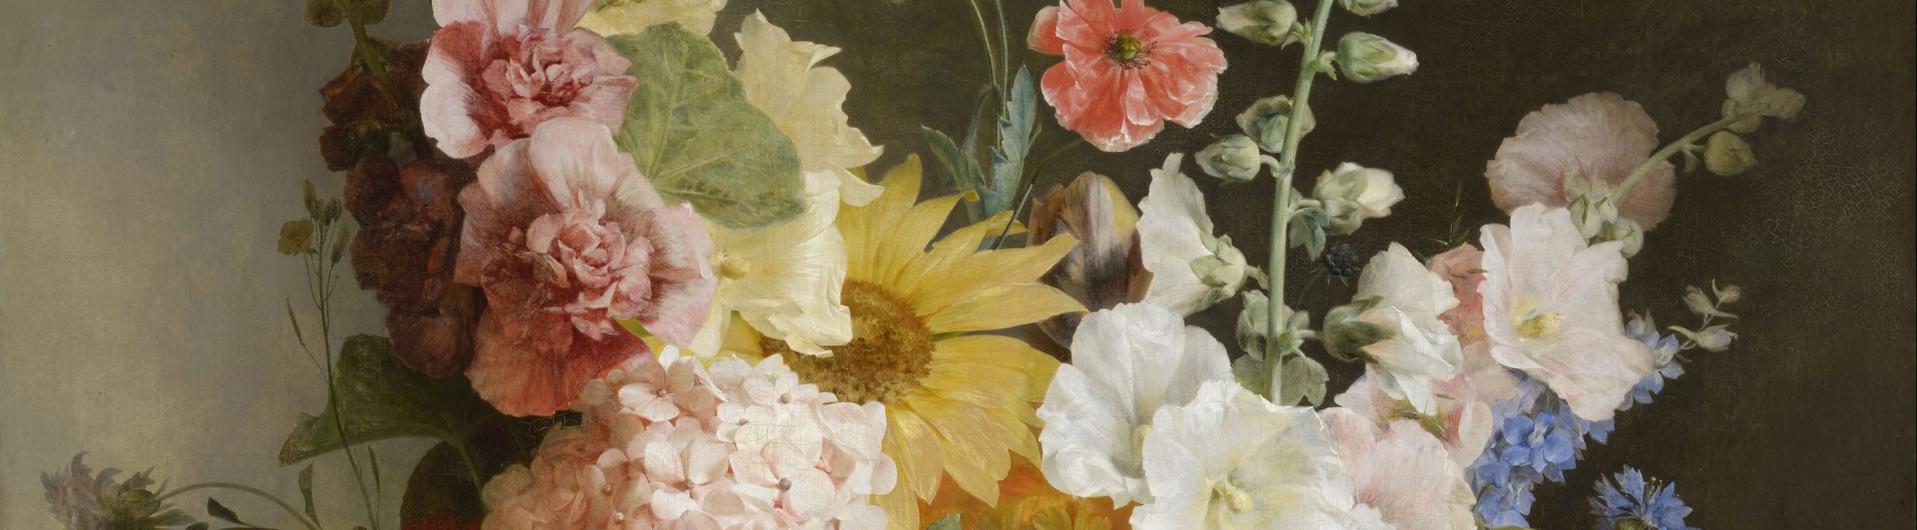 Antoine Berjon, Fruits et fleurs dans une corbeille d'osier, 1810. 